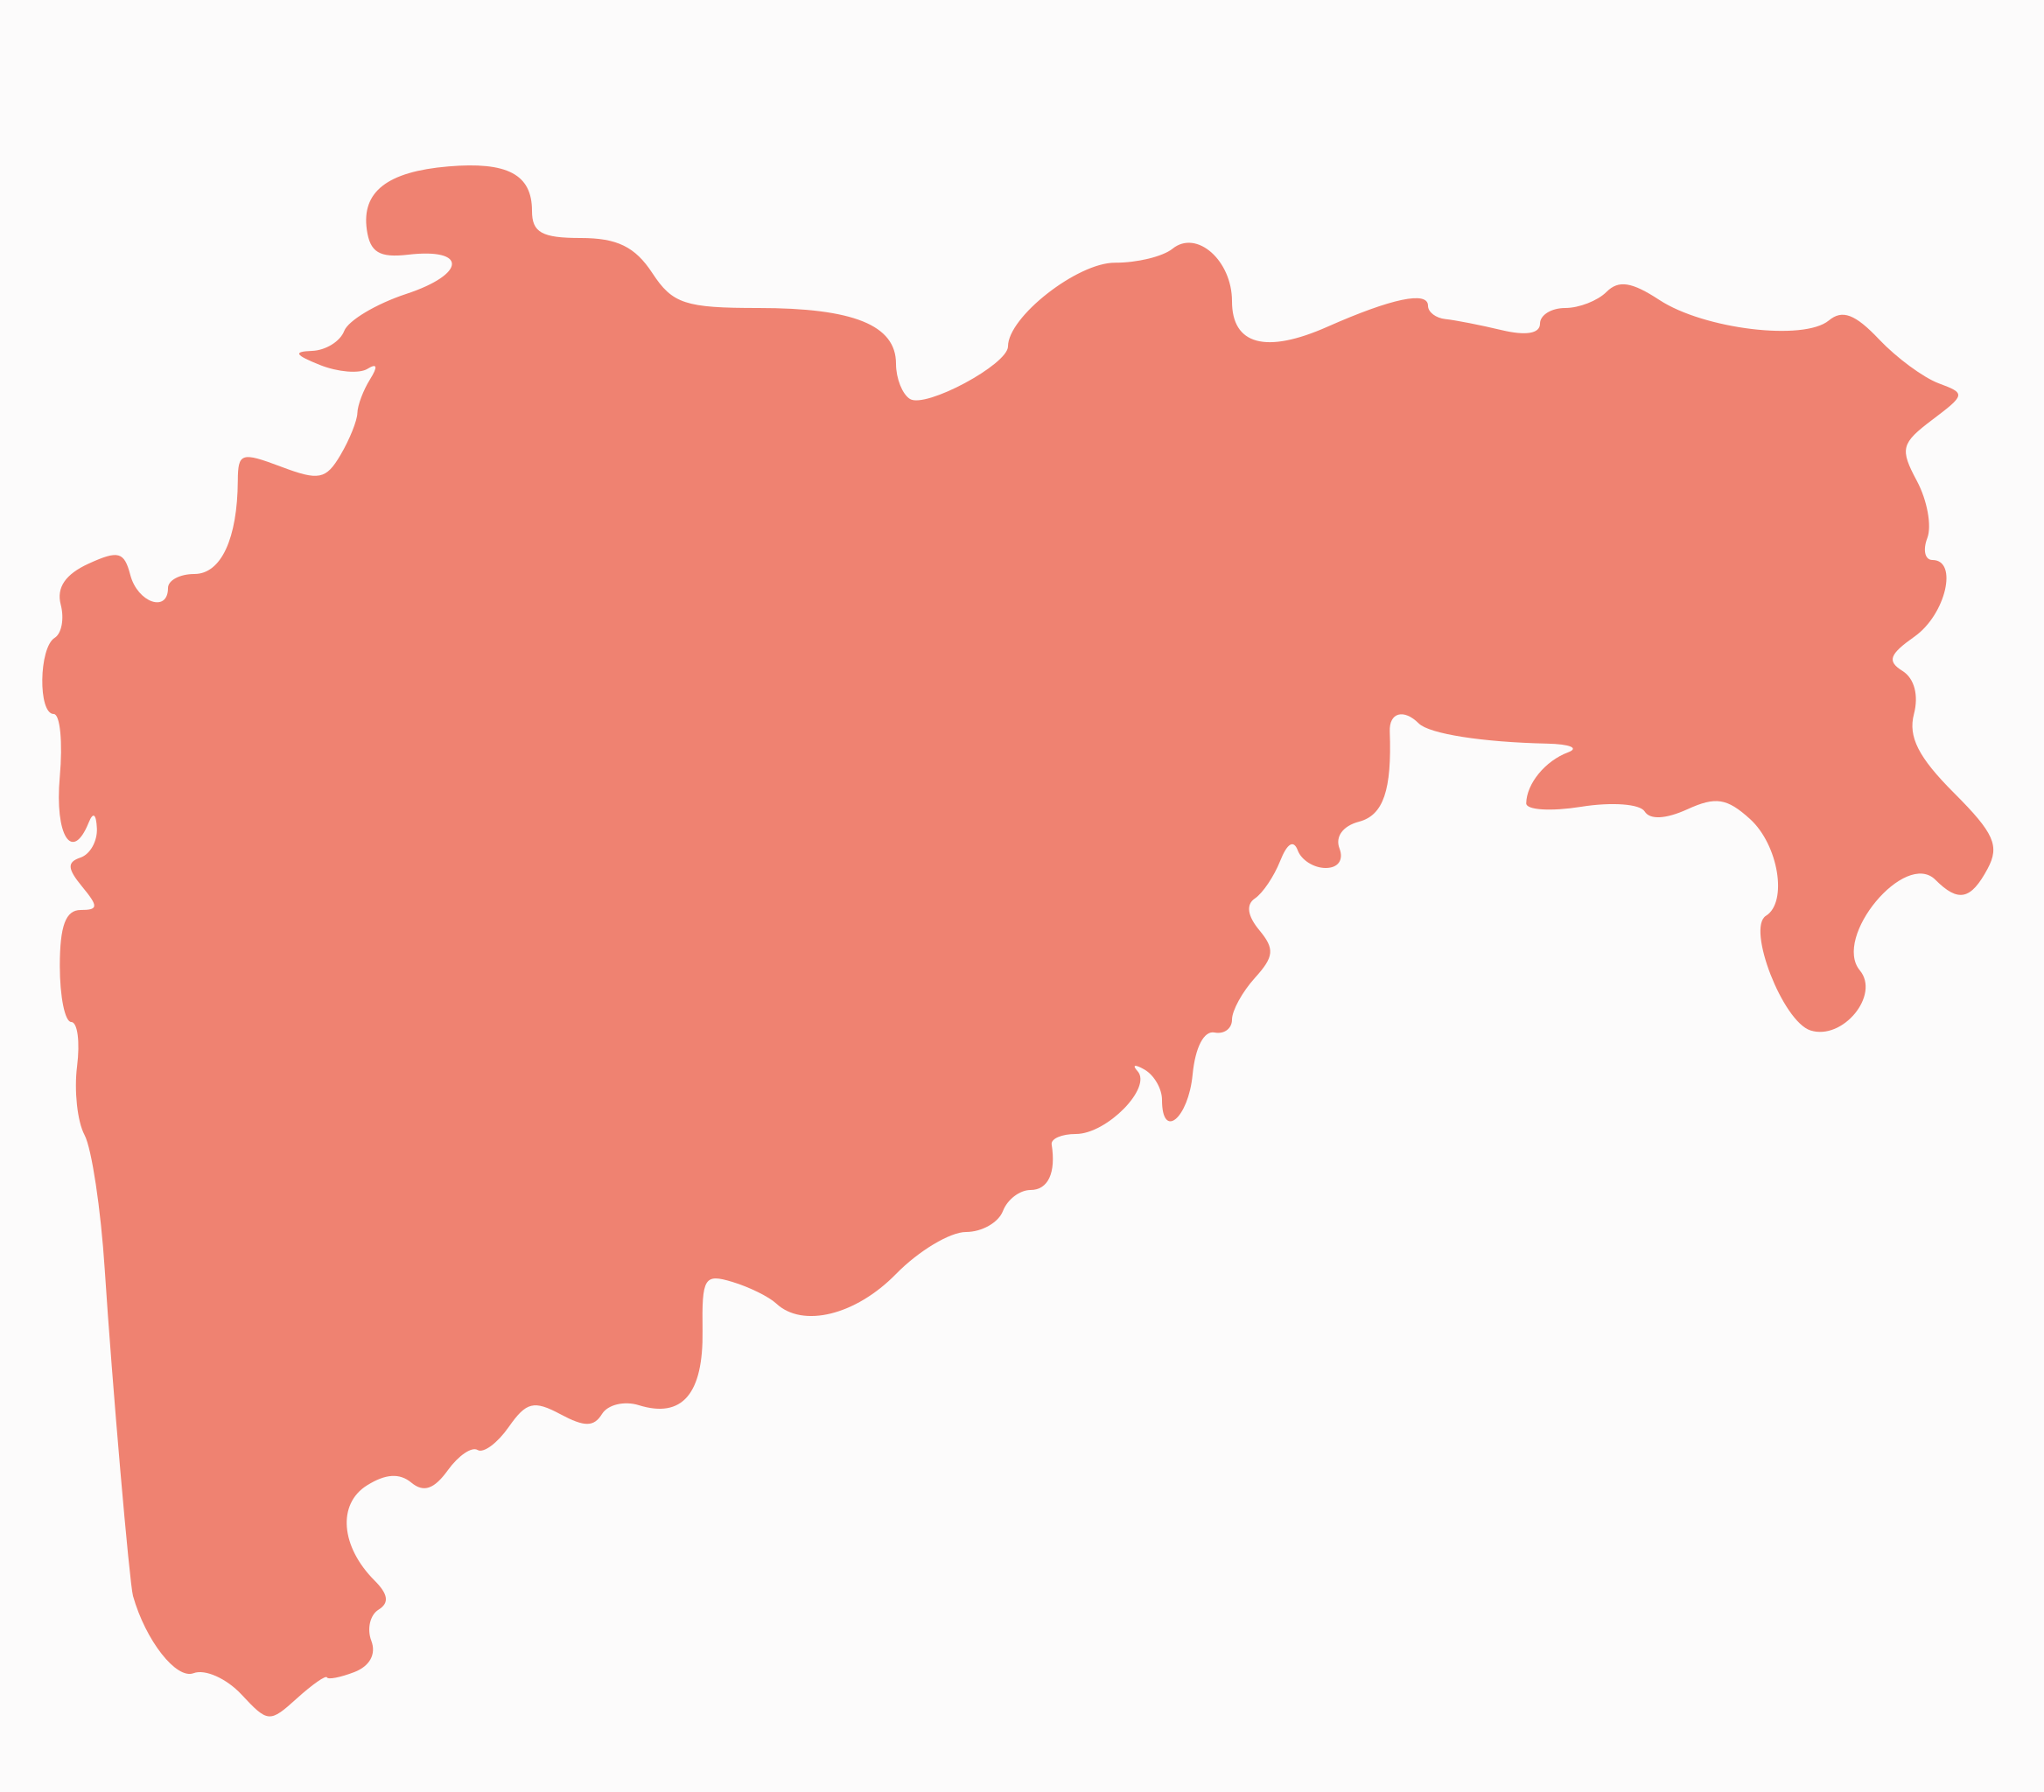 Outline of Maharashtra - Wikipedia